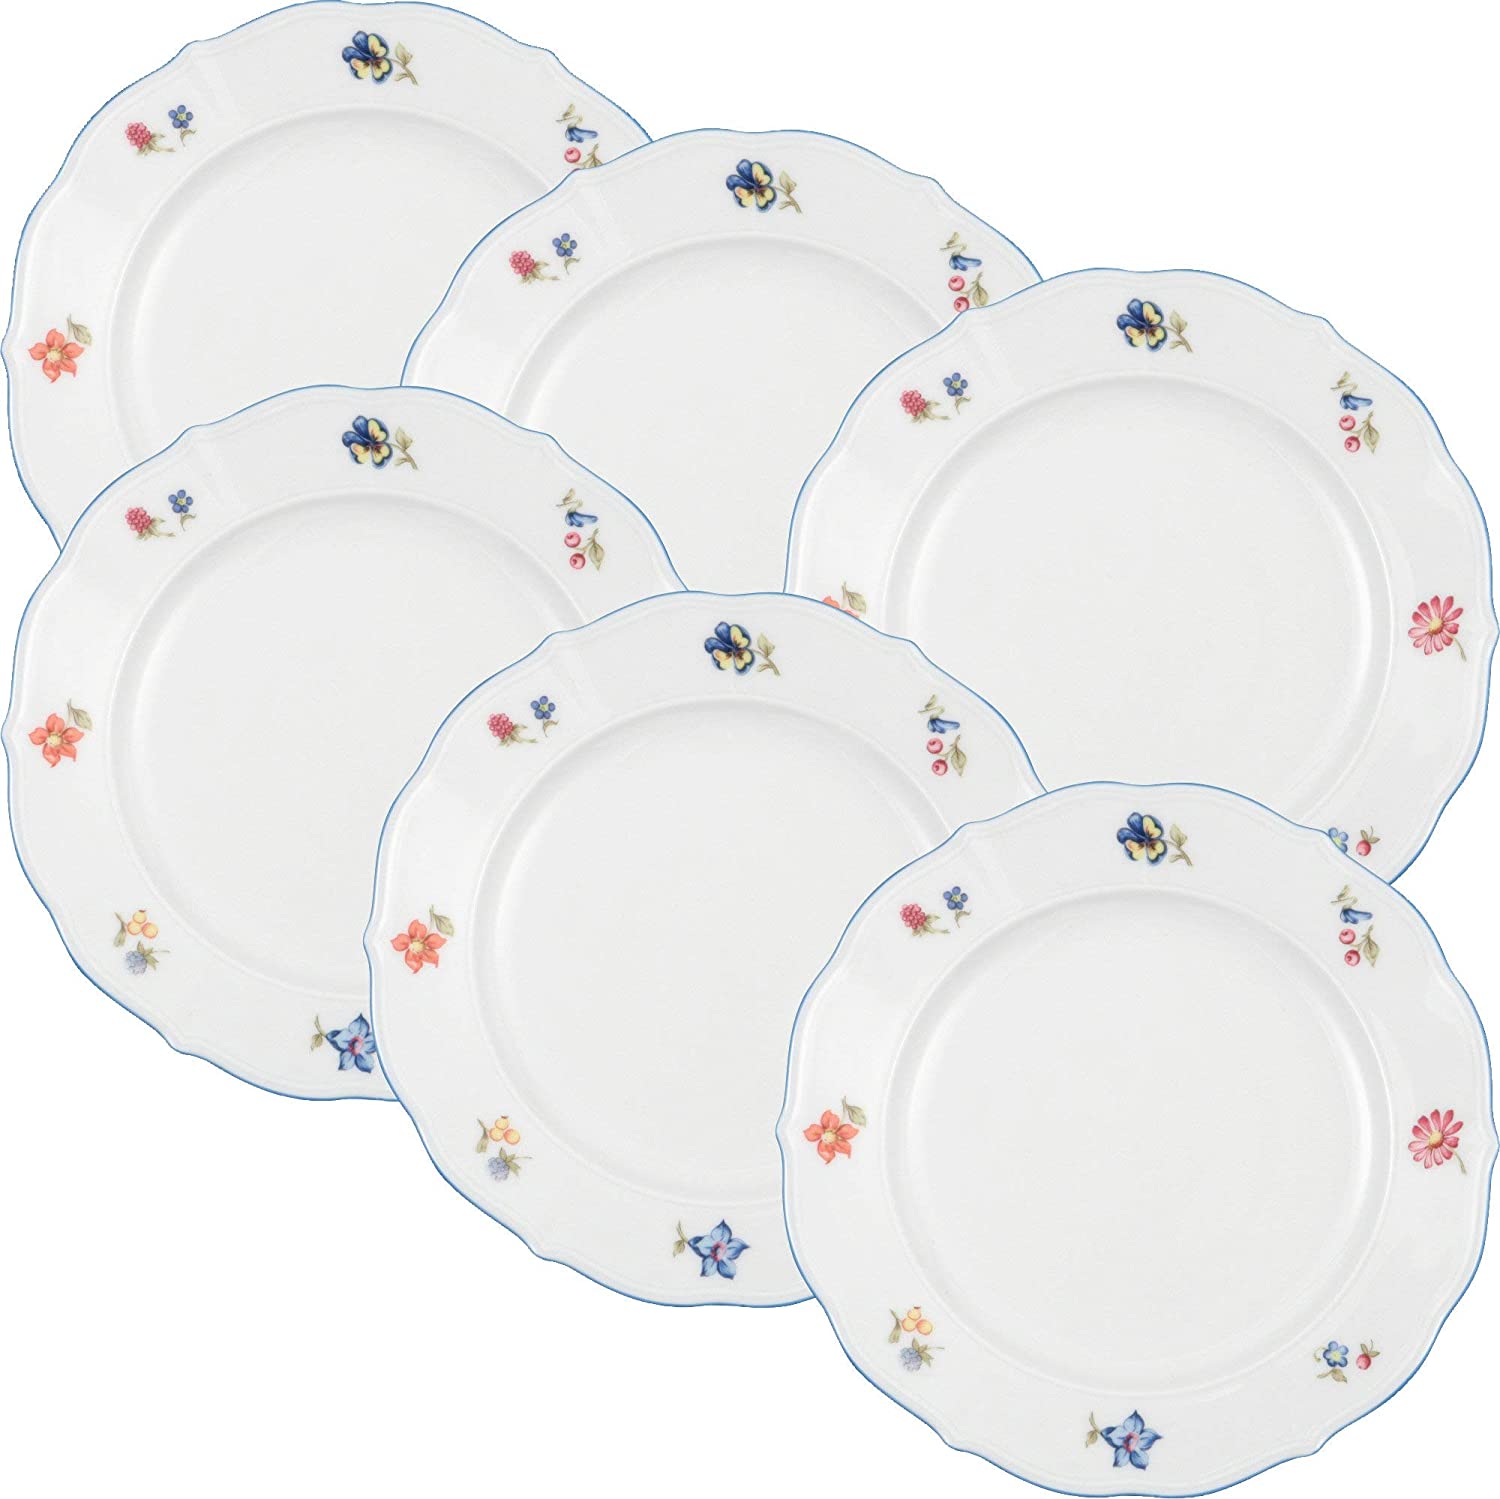 Seltmann Weiden Dessert Plates Set of 6 Nostalgia Scattered Flower Design, Colourful, 20 cm Ø